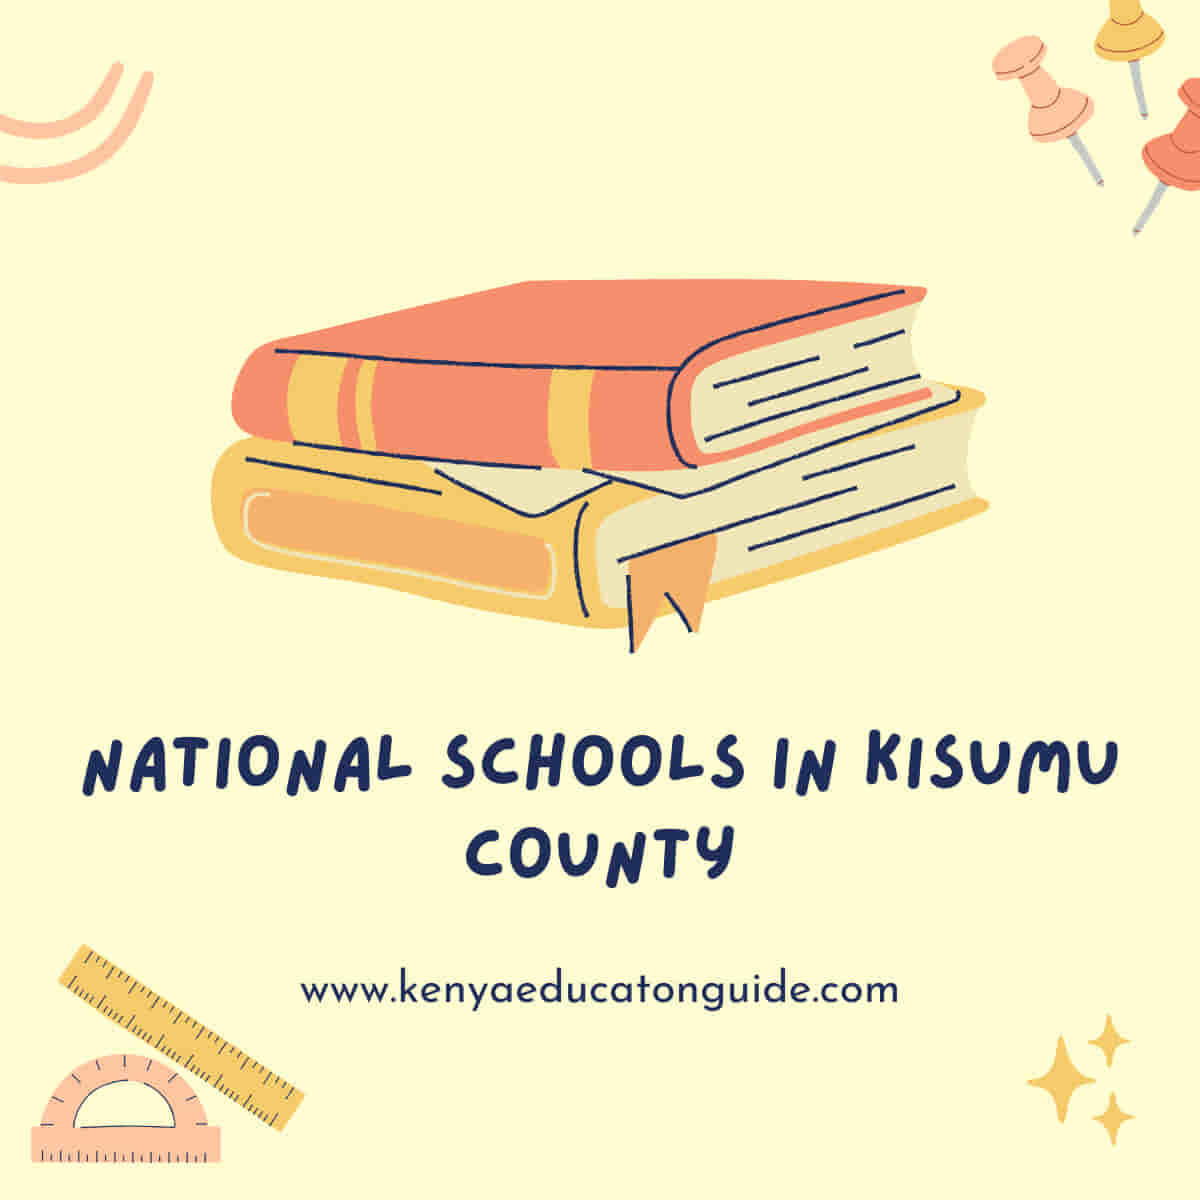 National schools in Kisumu county